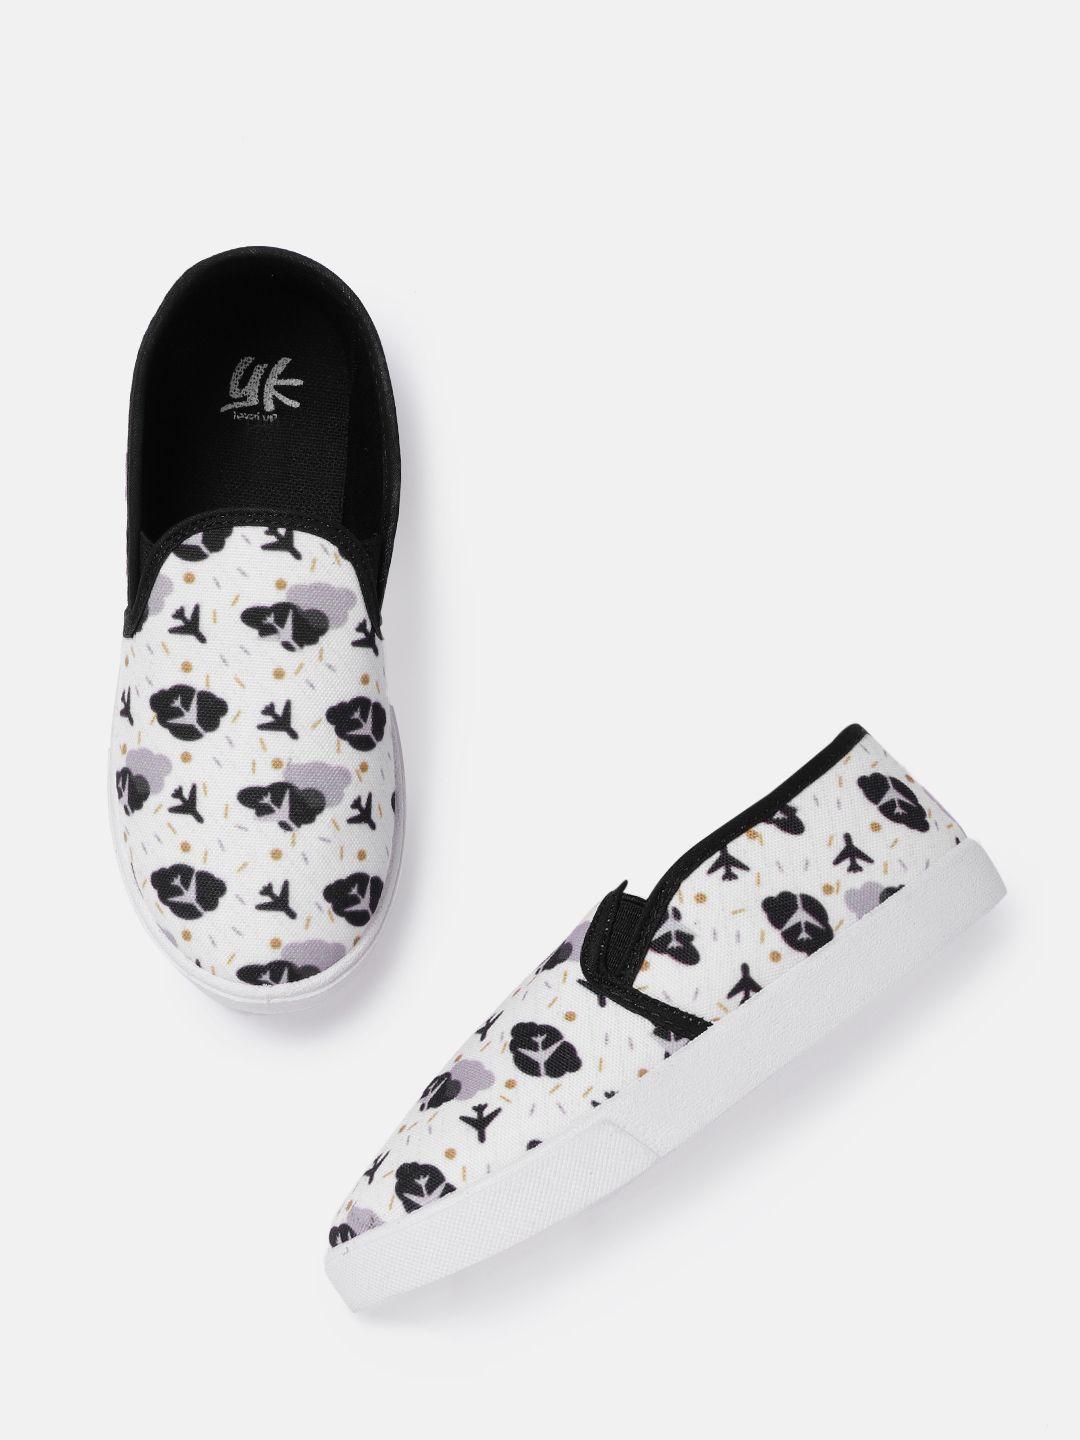 yk kids off-white & black conversational print washable slip-on sneakers